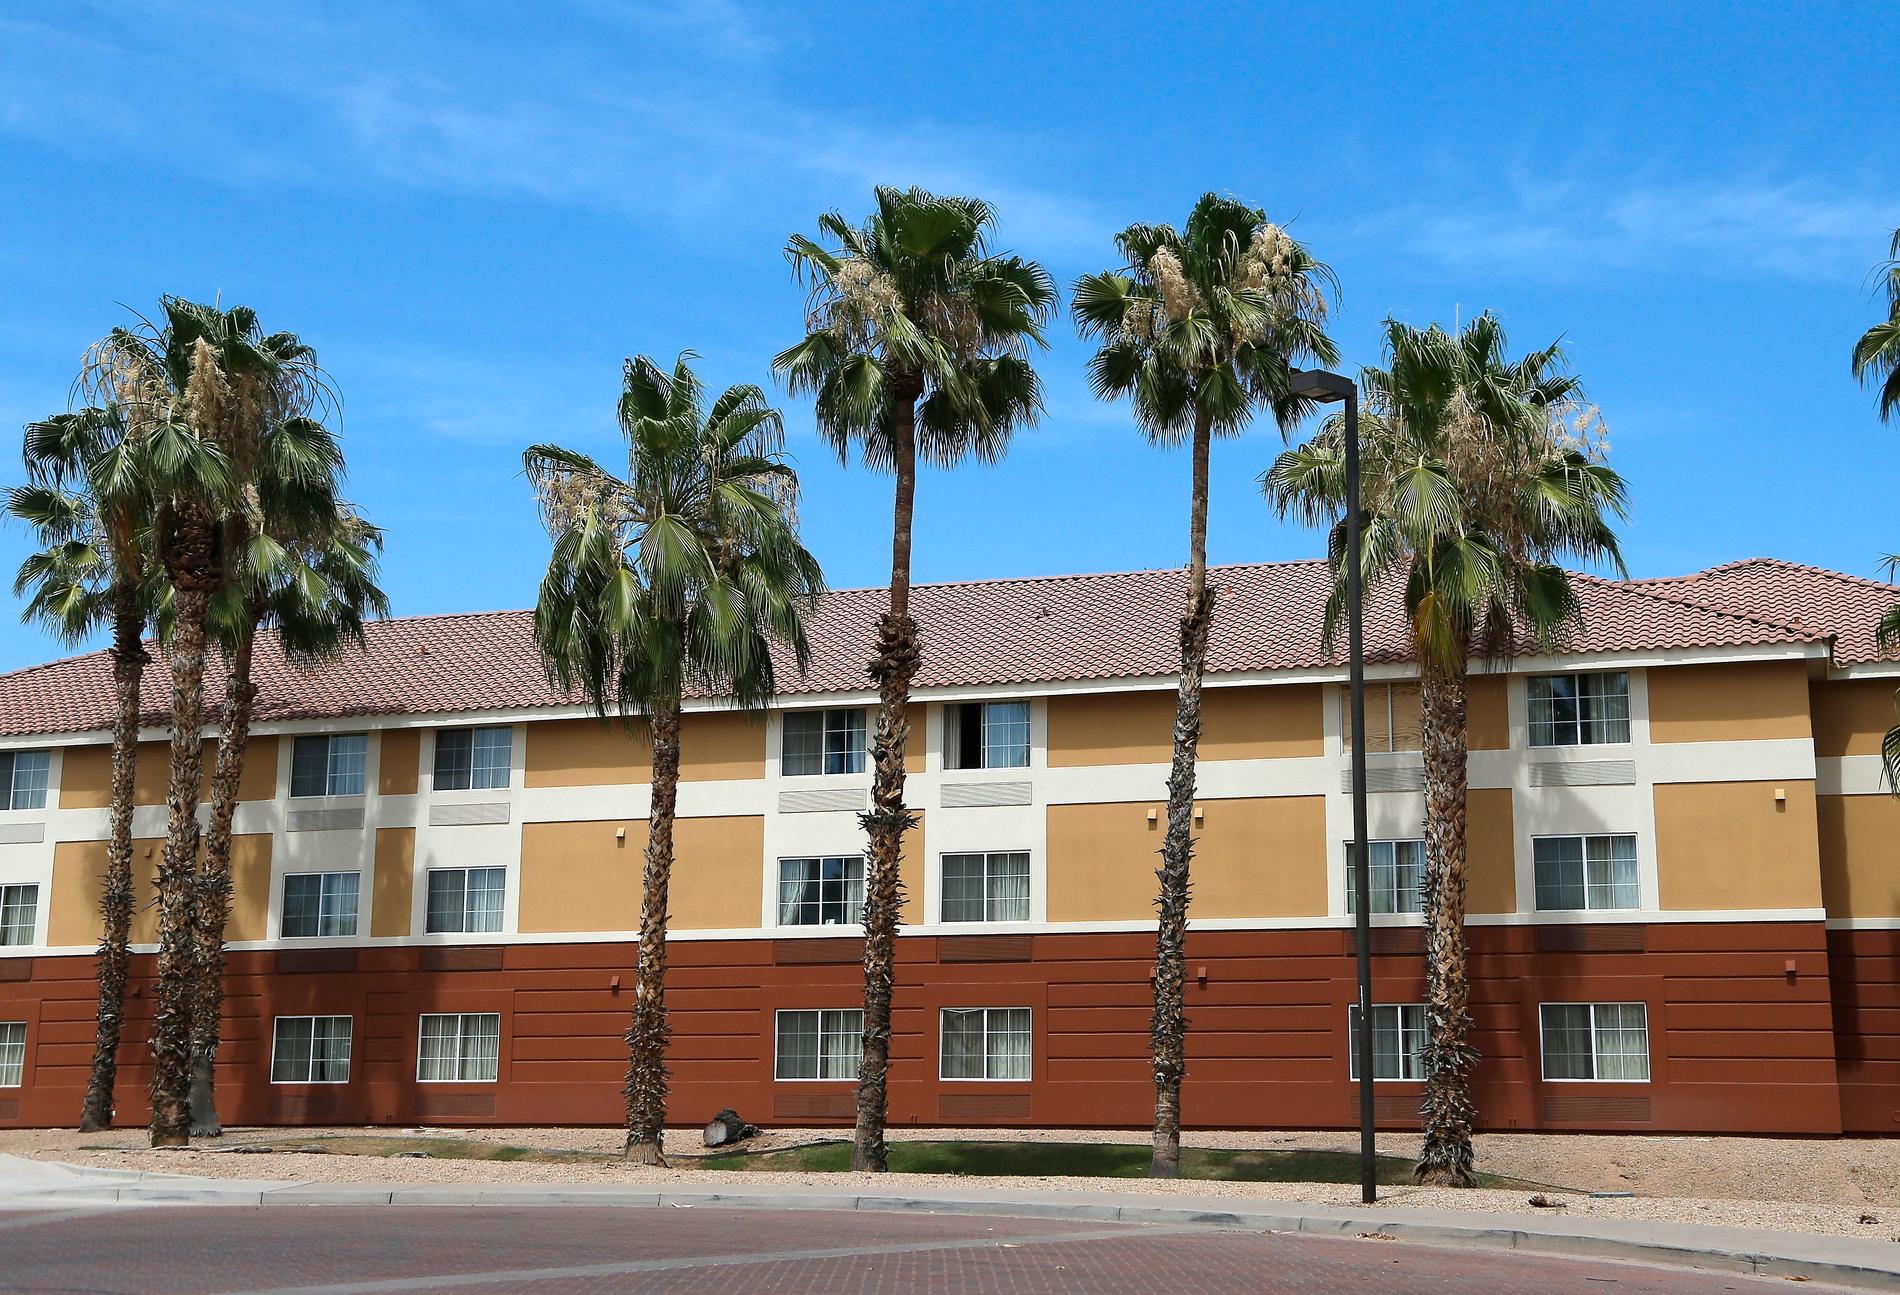 Jones barrikaderade sig på ett motellrum i Scottsdale i Arizona.